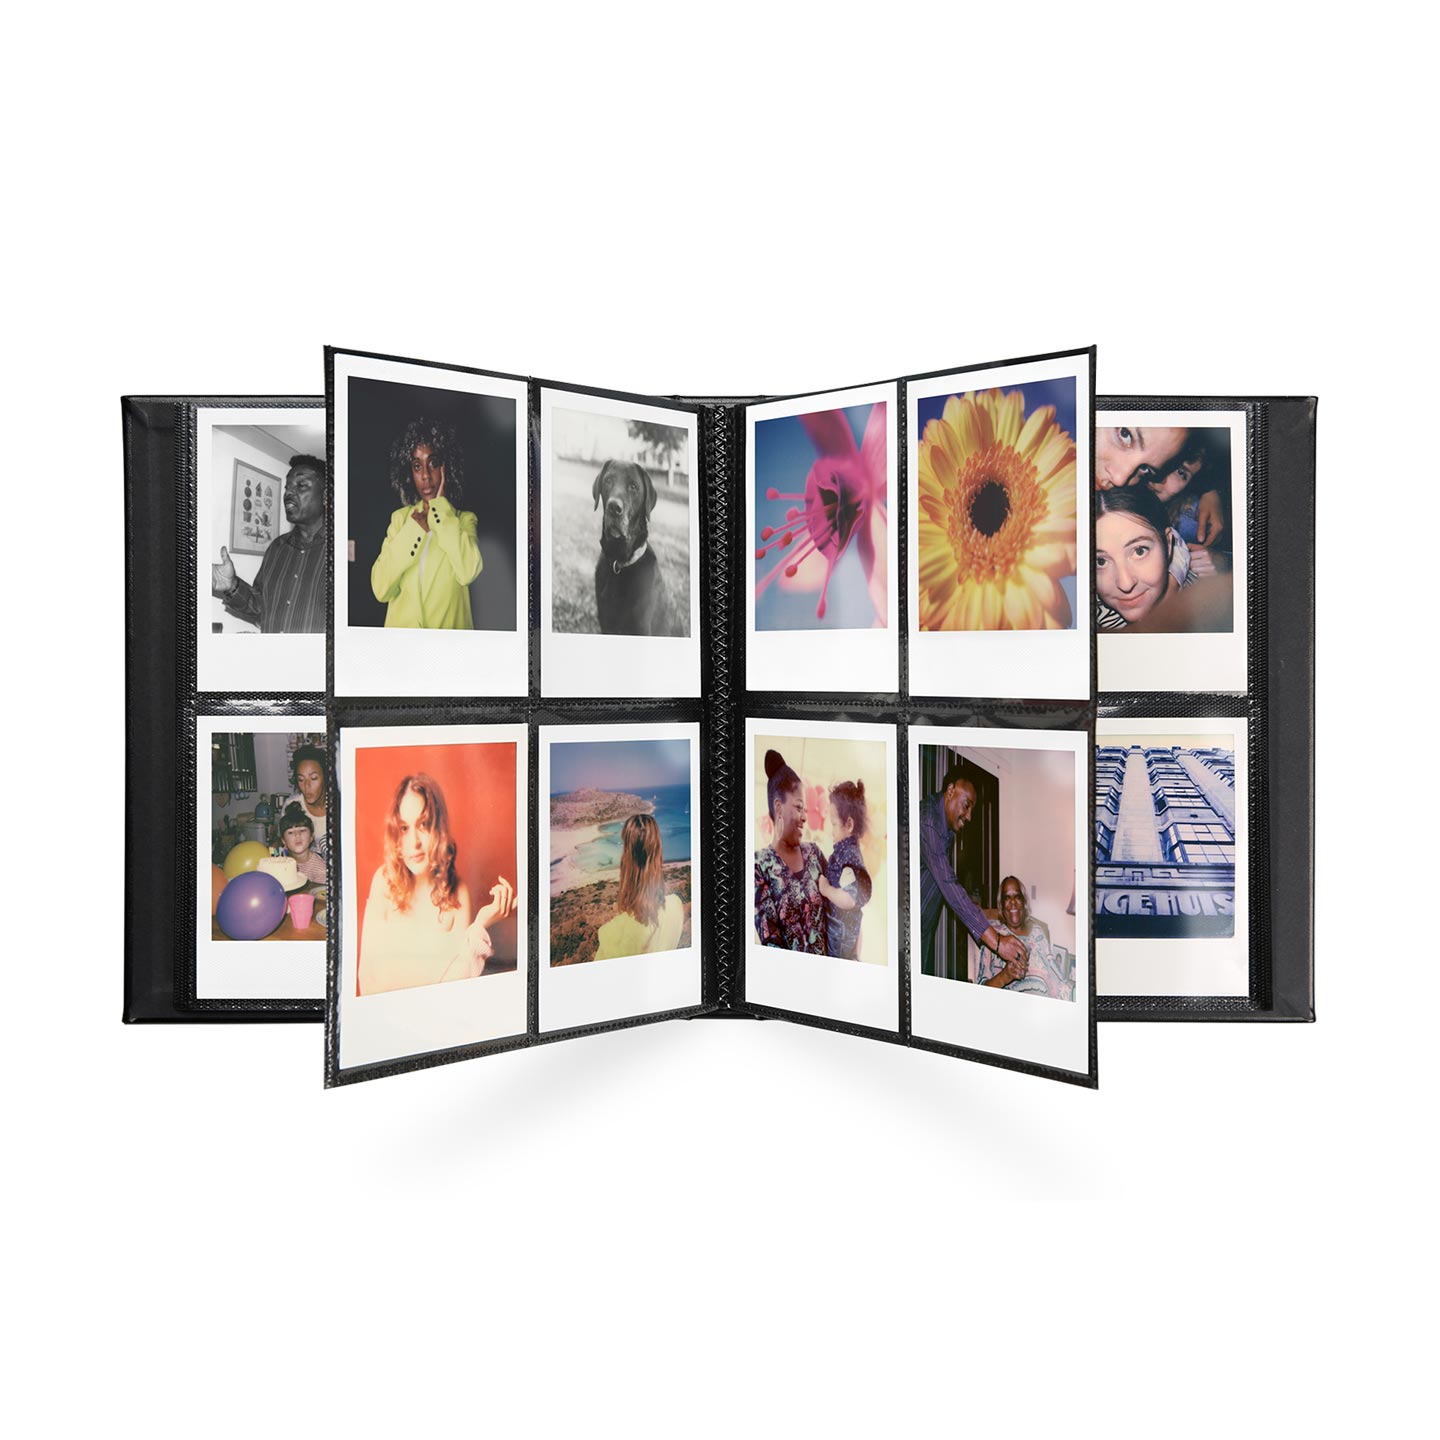 Polaroid Fotoalbum groß